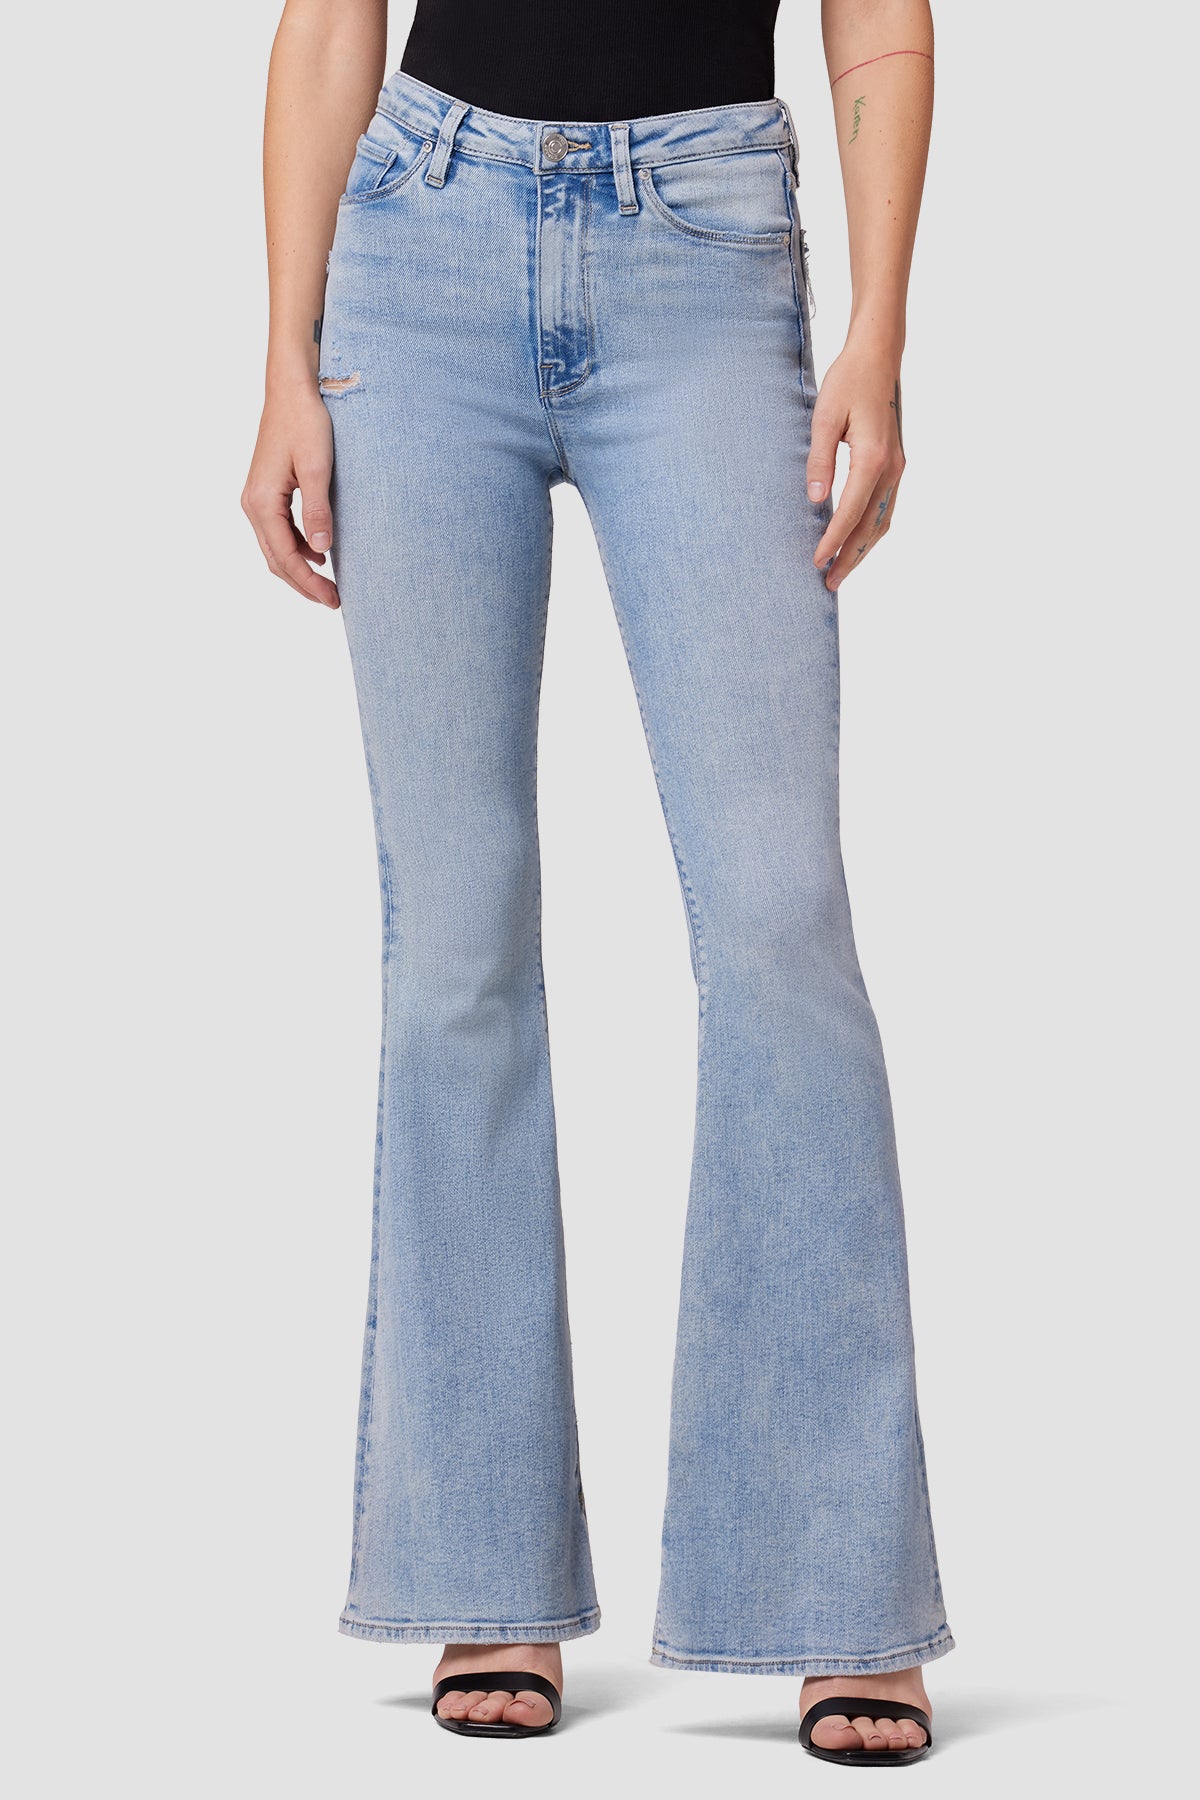 Blake Slim Flared Jeans With High Rise - Stunning Blue | NYDJ